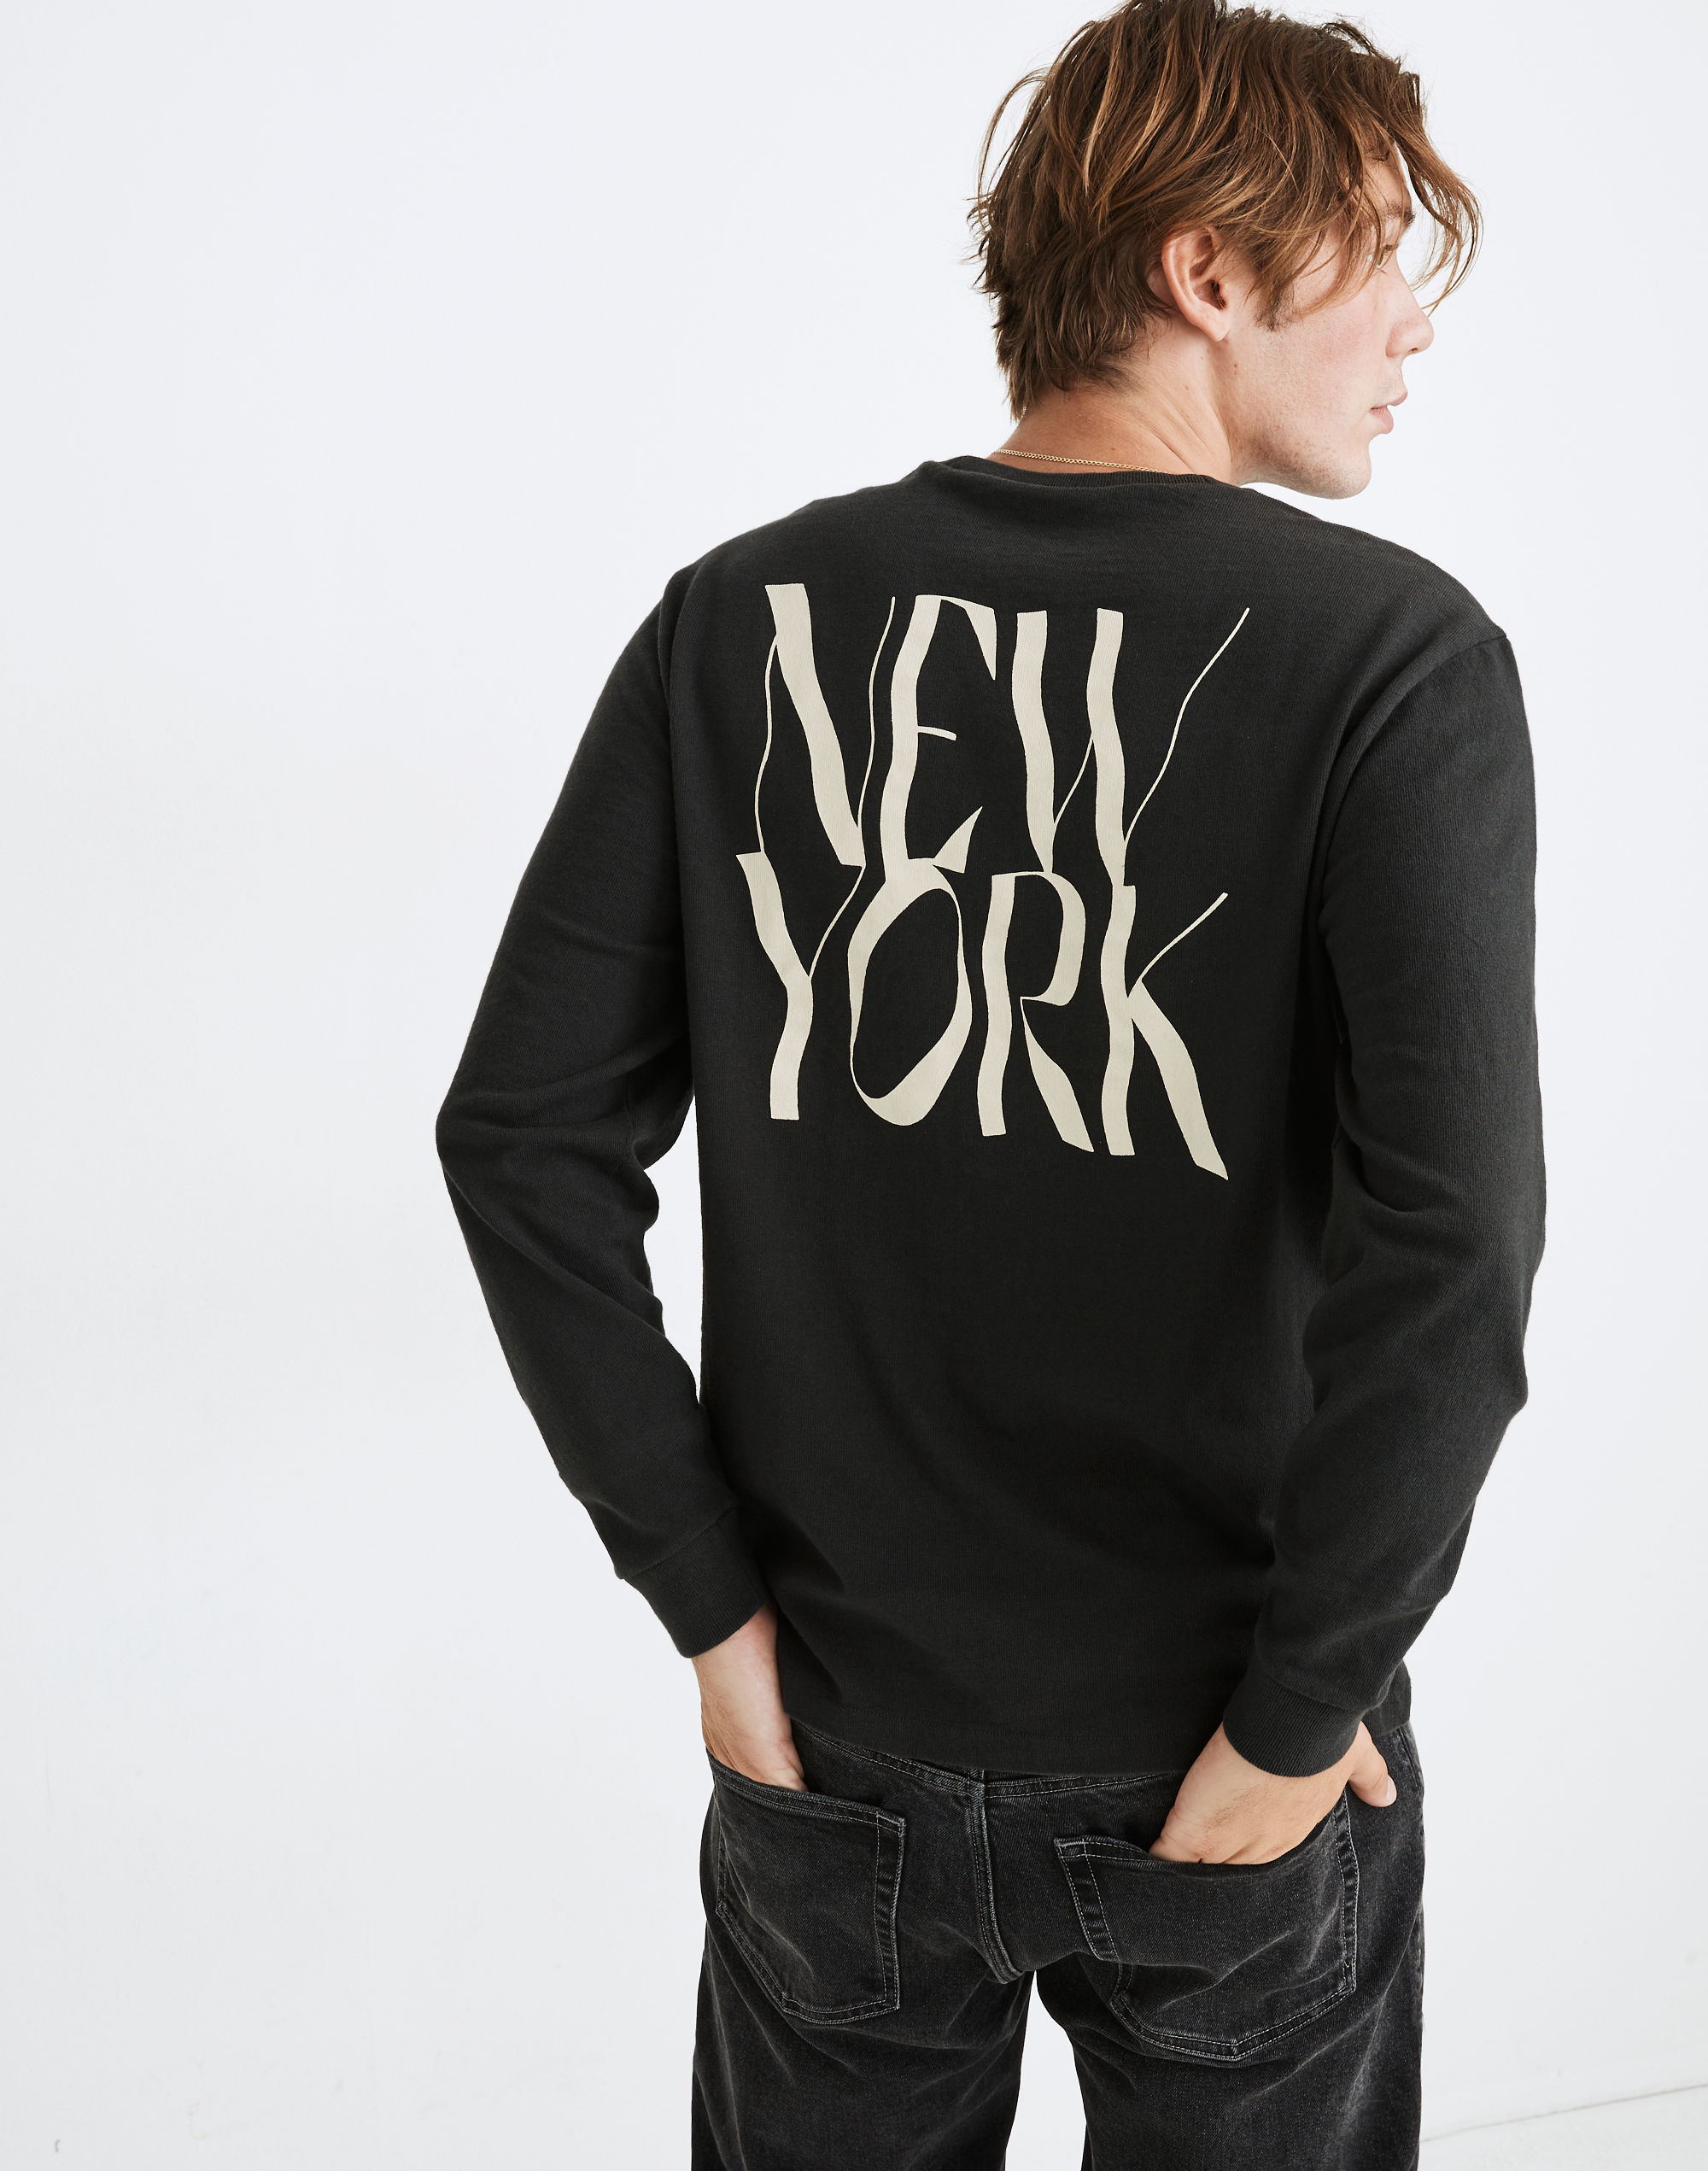 New York 199x Shirt Mens And Womens NYC T-Shirt